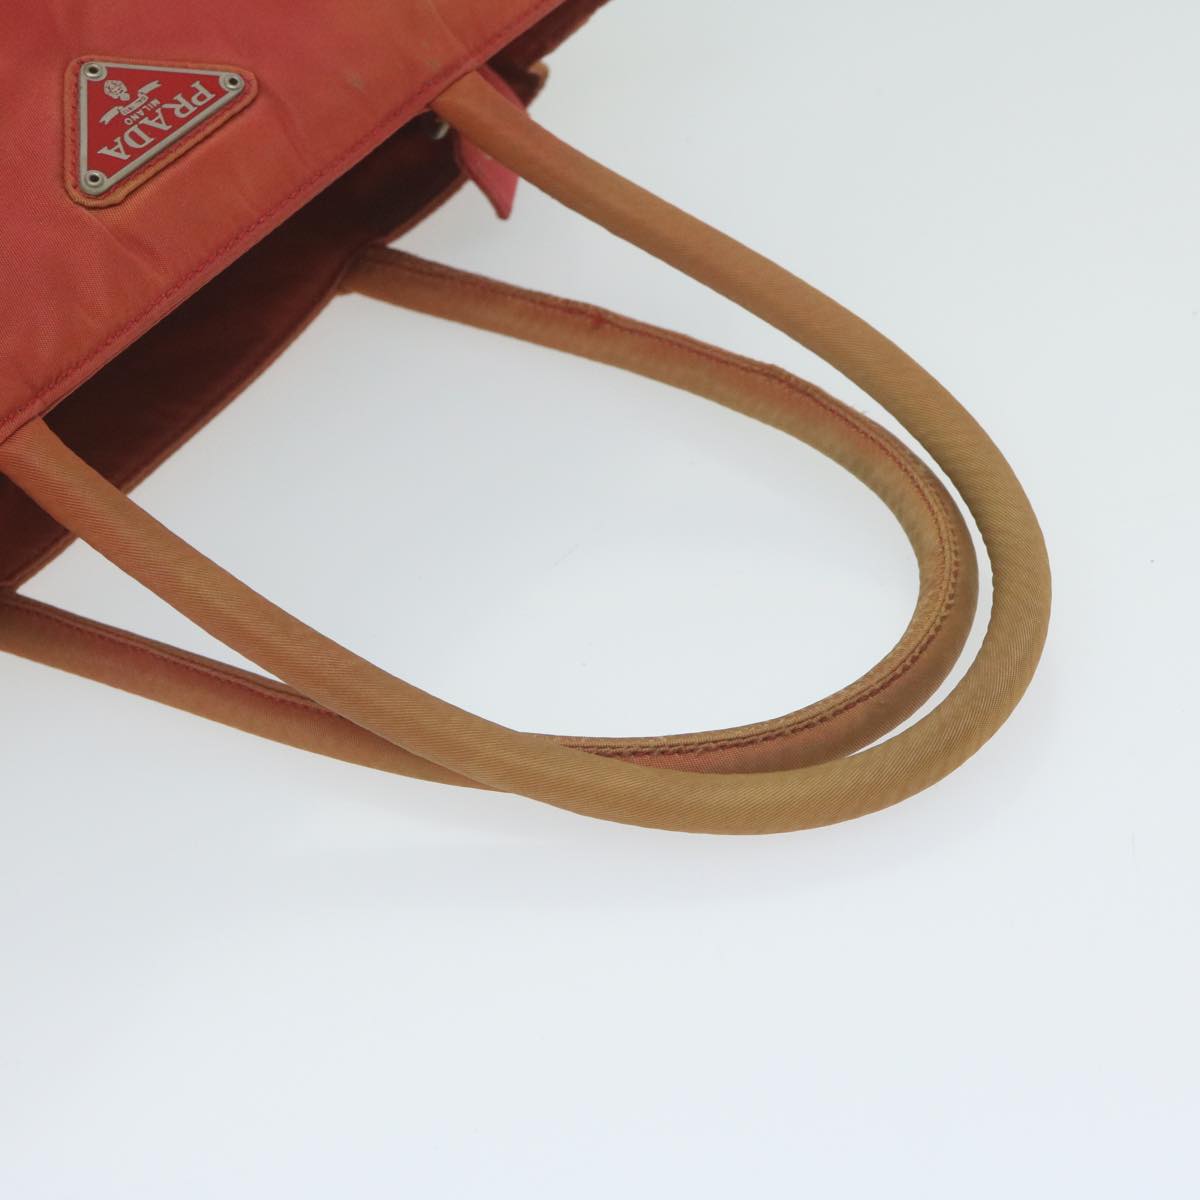 PRADA Hand Bag Nylon Red Auth 62359